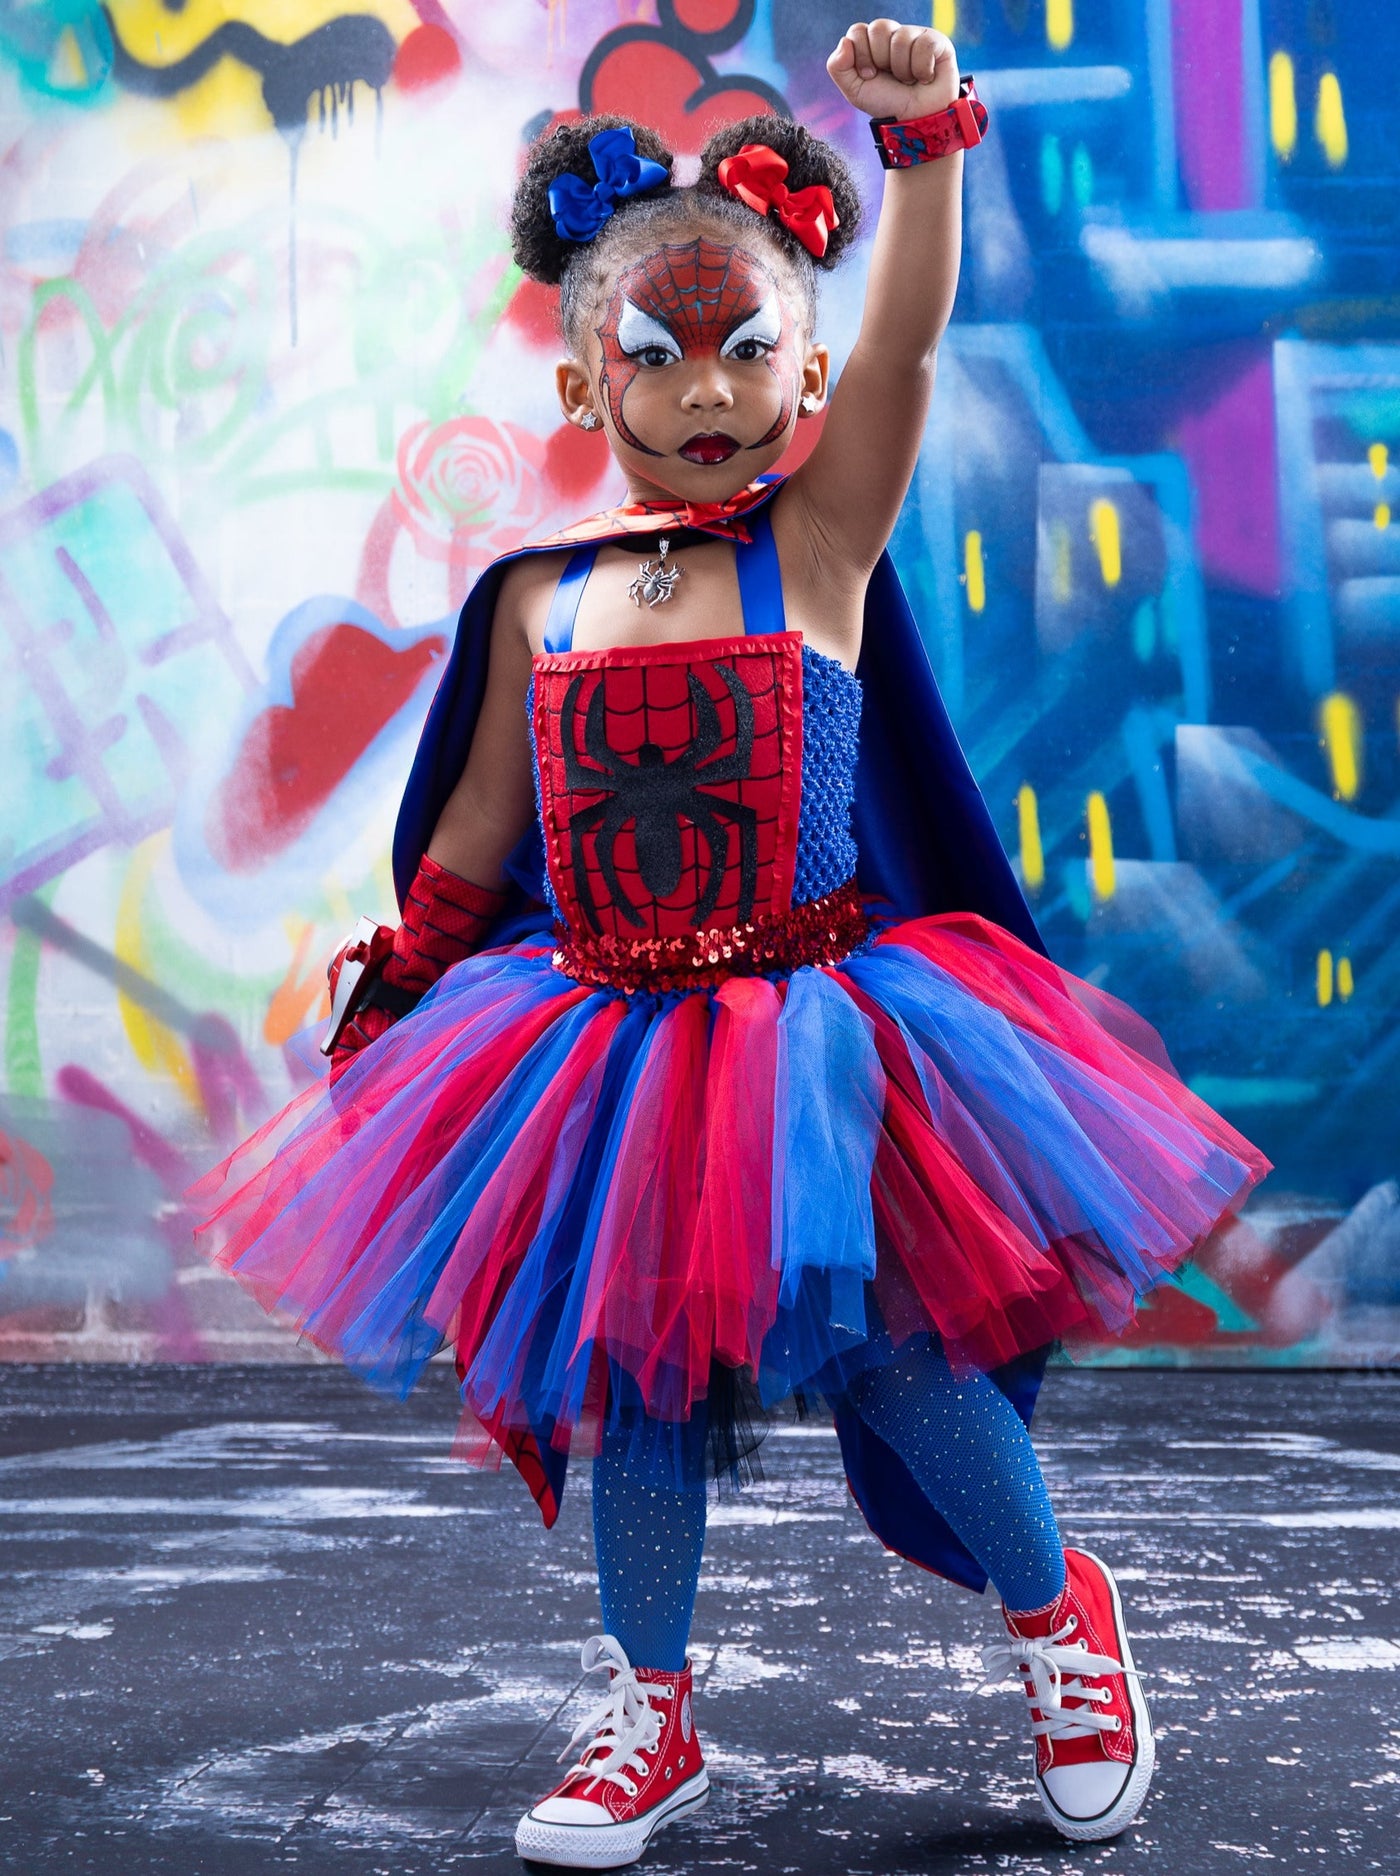 Girls Halloween Costume, Spider-Girl Inspired Tutu Dress